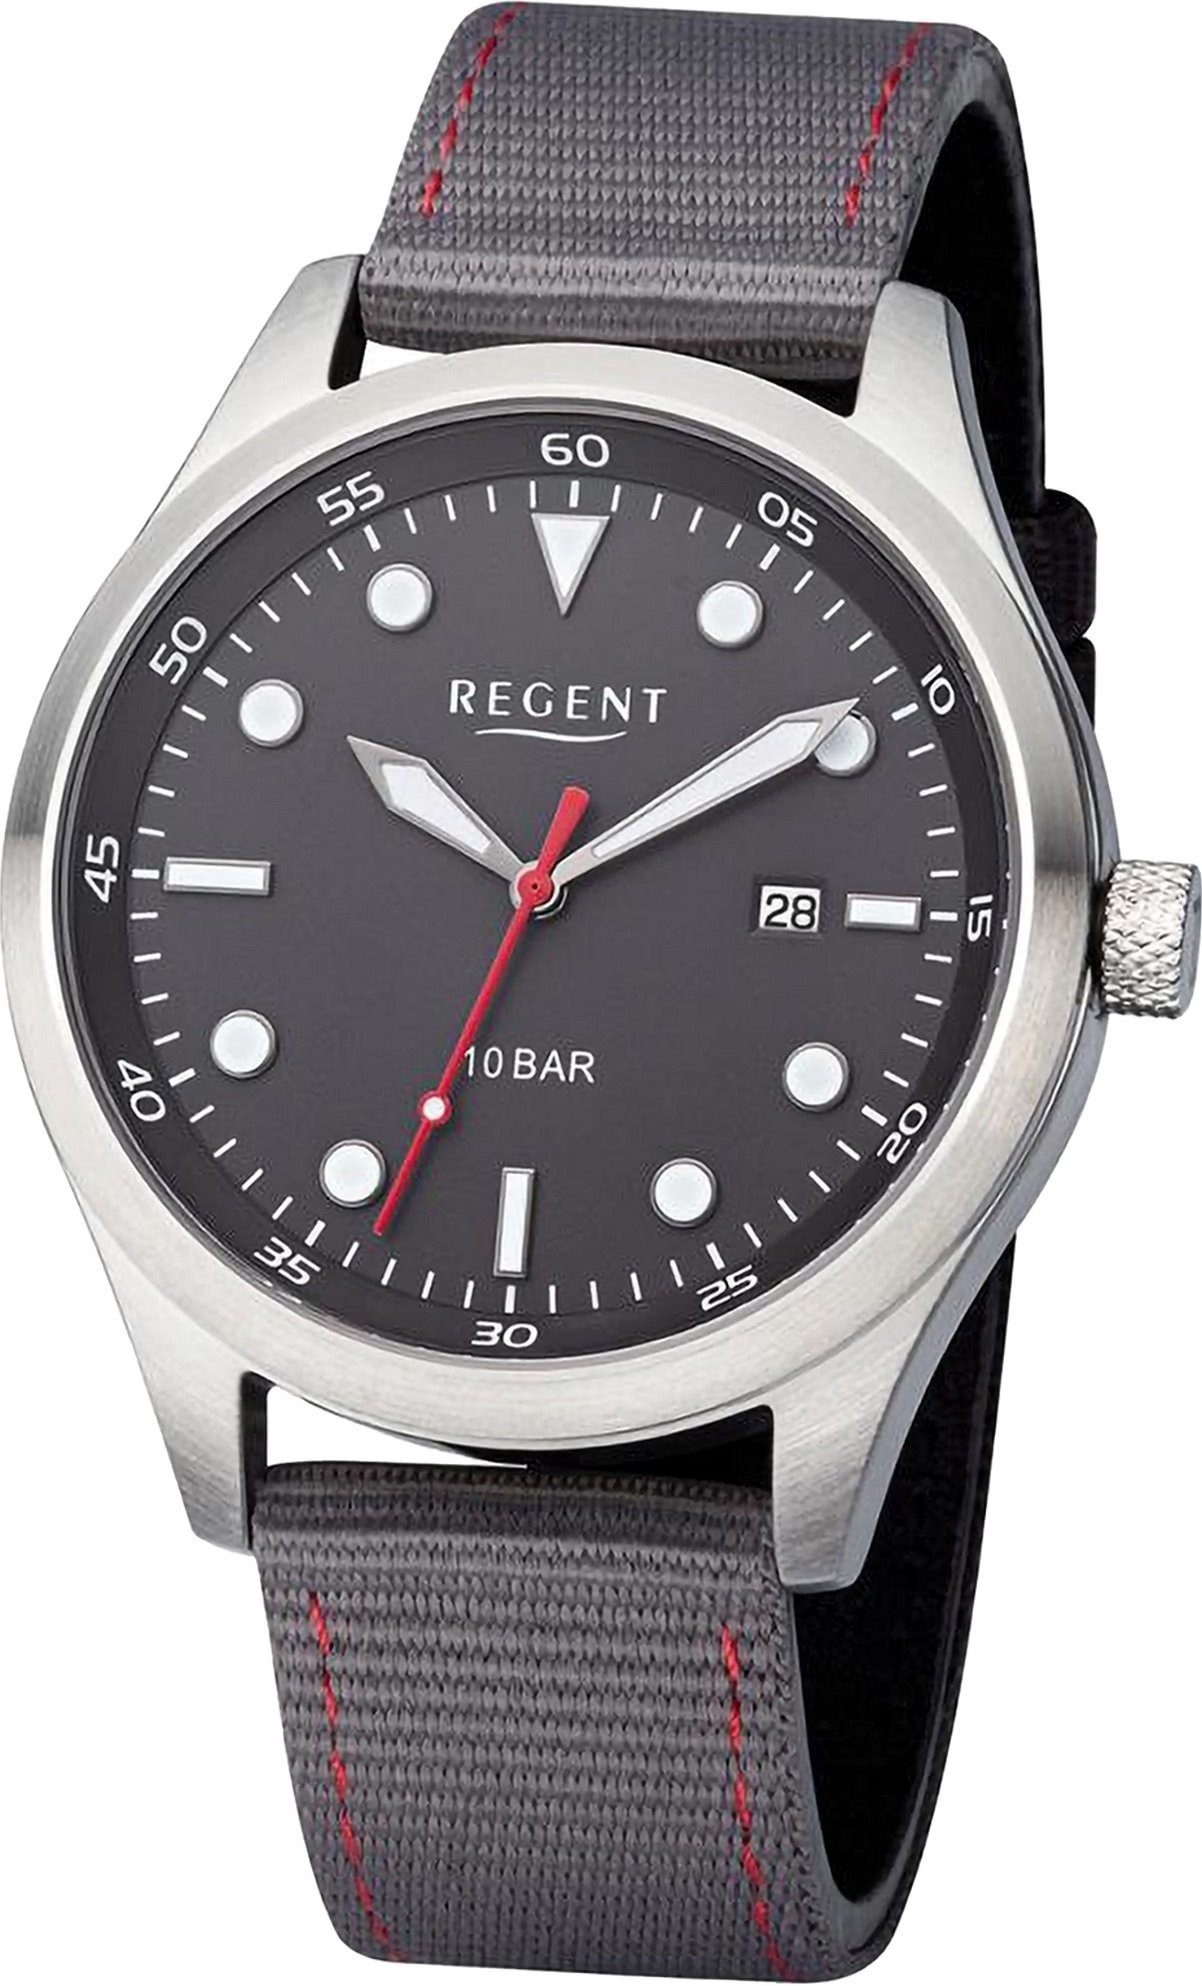 42mm), Analog, (ca. Textilarmband Regent extra Armbanduhr Armbanduhr groß Regent rund, Quarzuhr Herren Herren